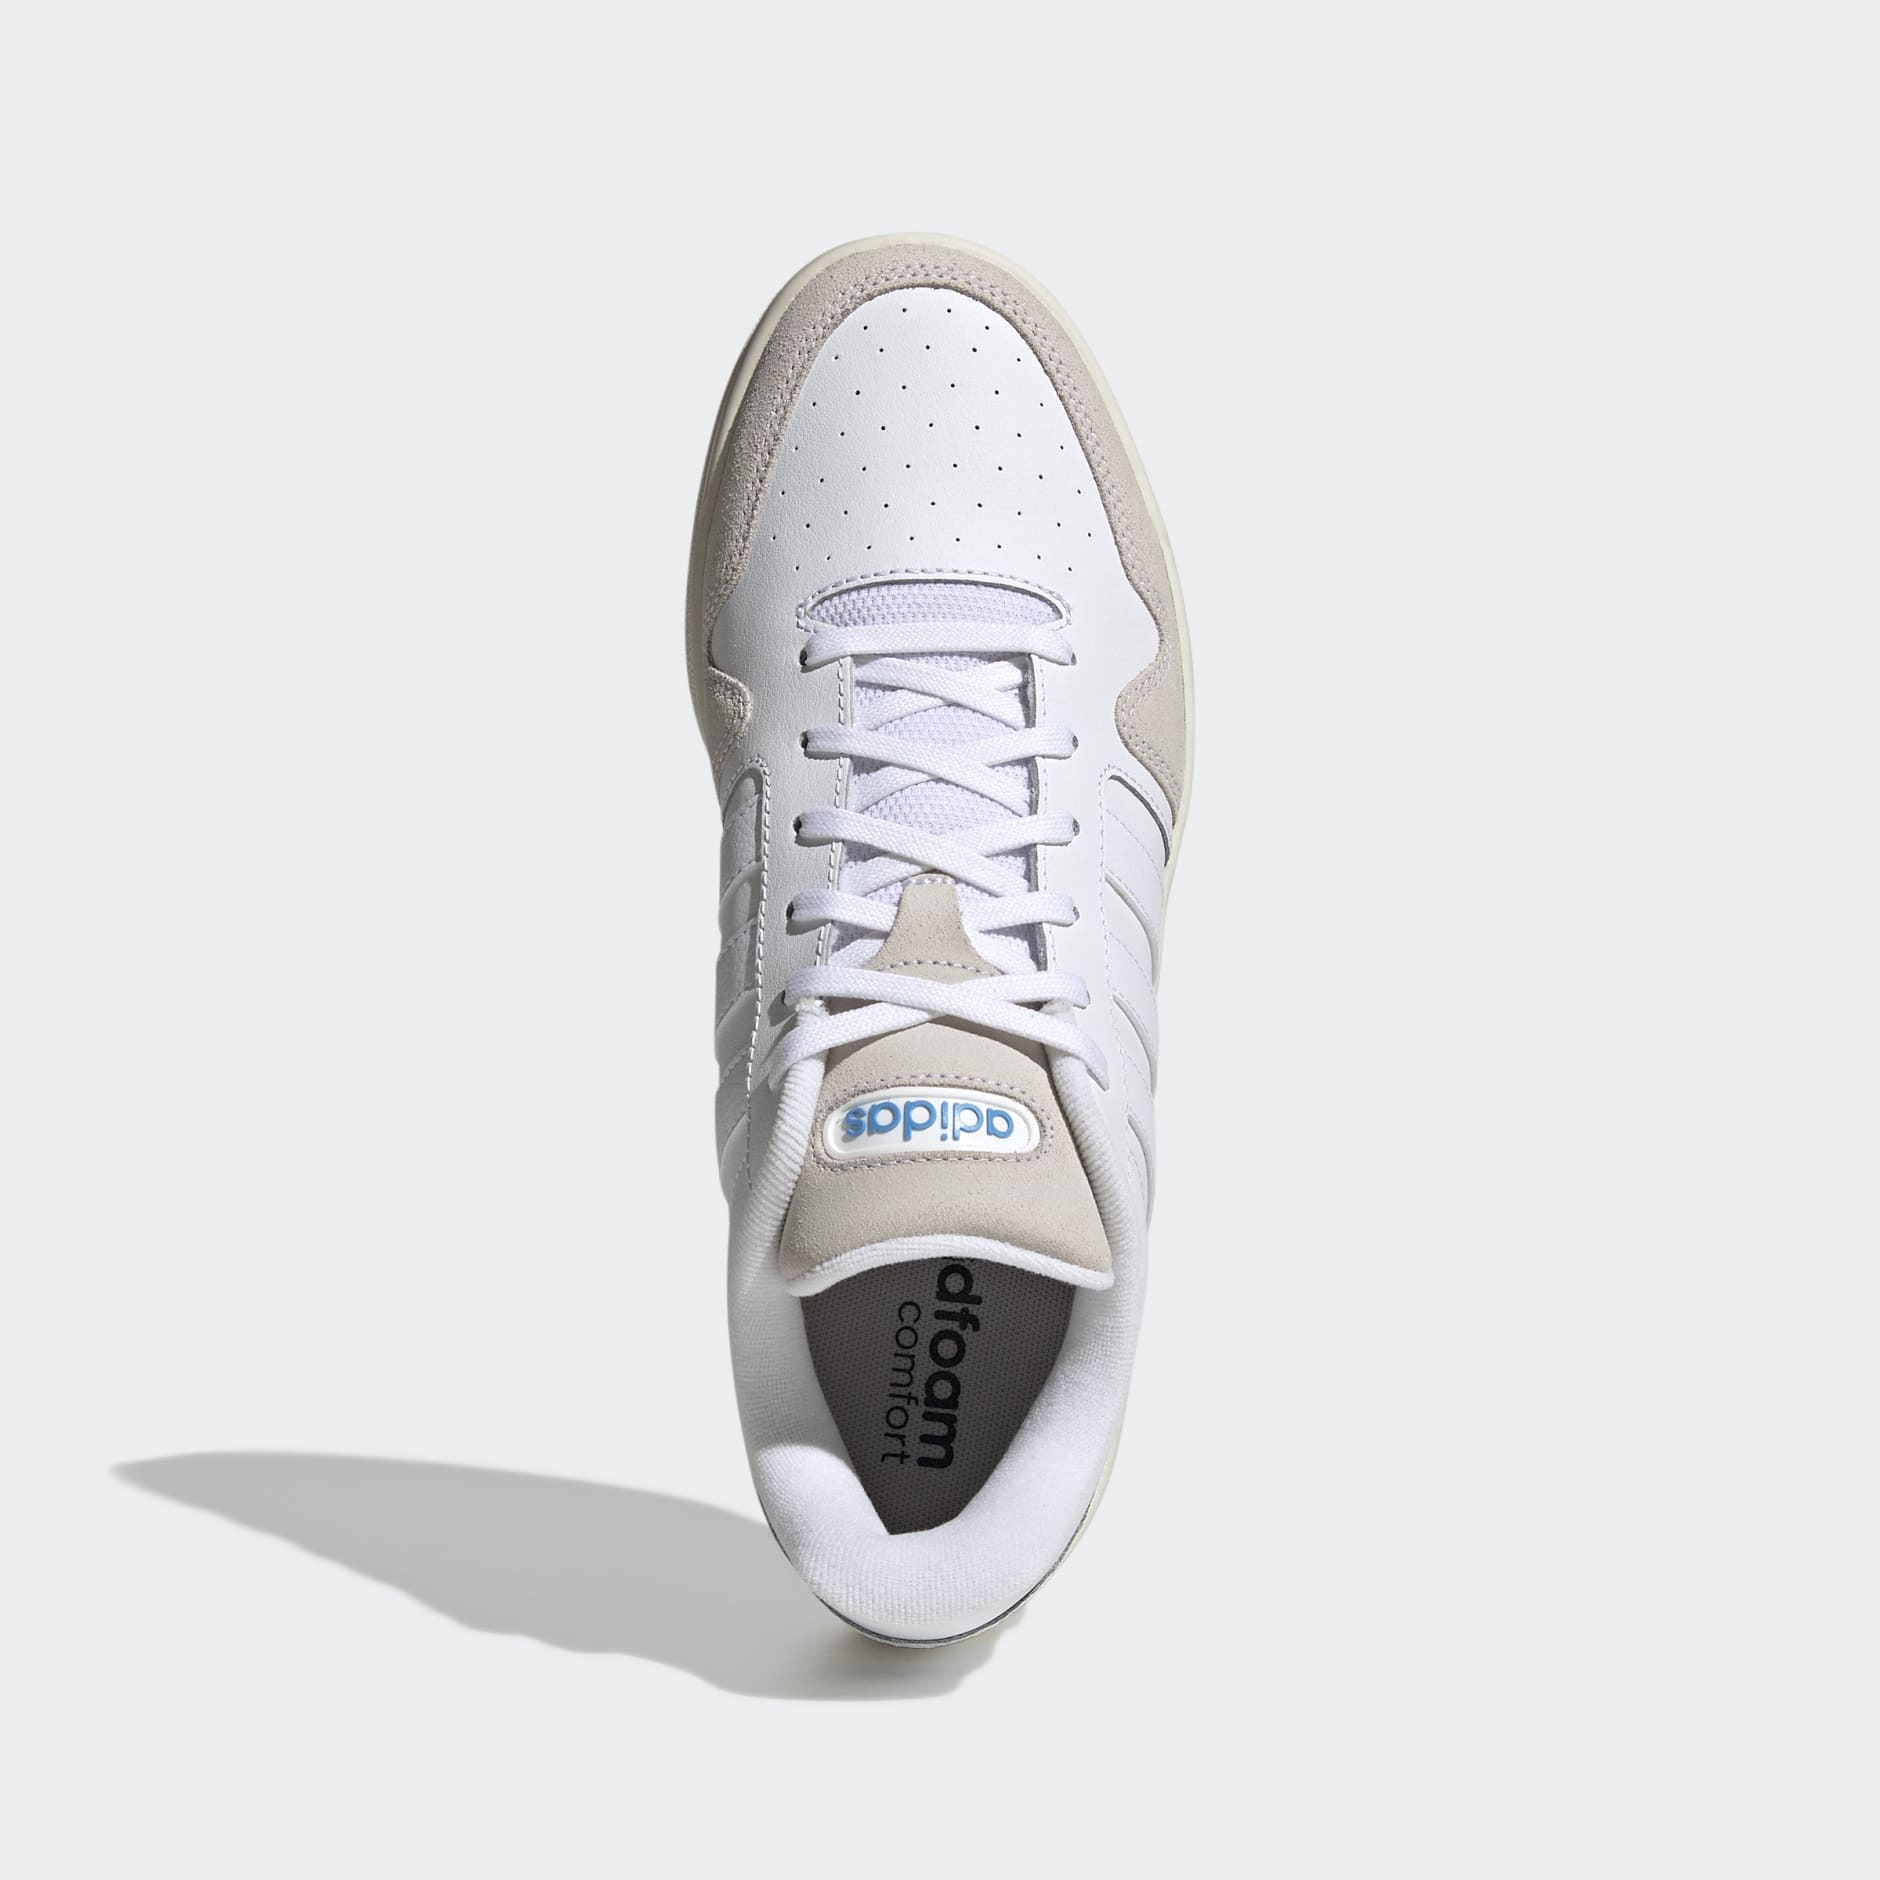 adidas Postmove Super Lifestyle Low Basketball Shoes - White | adidas IQ